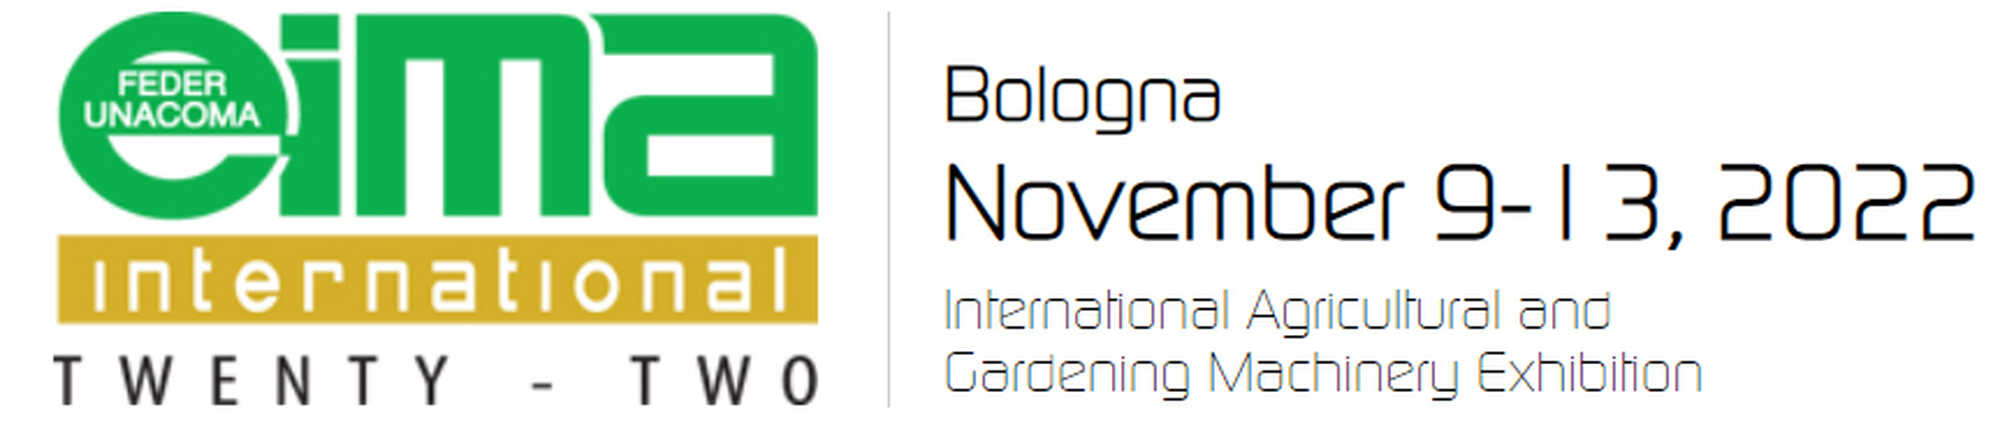 Bologna, 9-13 november 2022